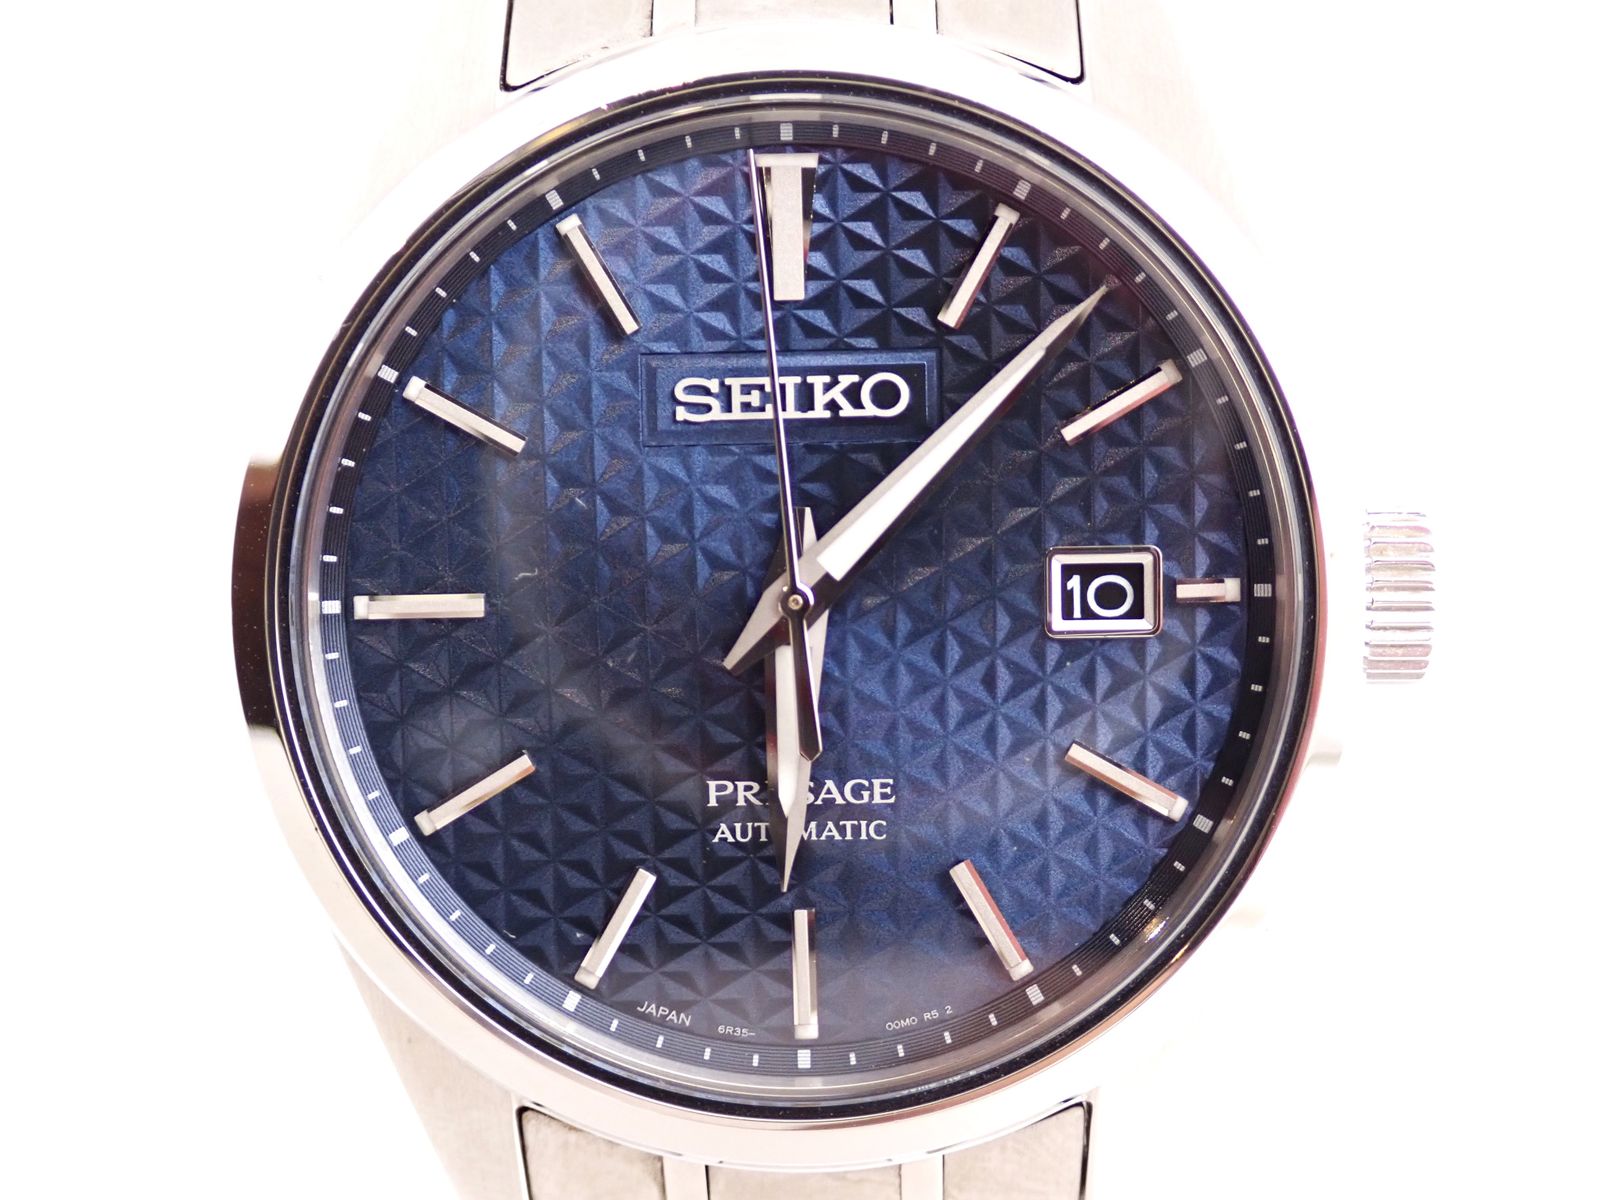 SARX077 腕時計 セイコー プレザージュ P estige Line 機械式自動巻き